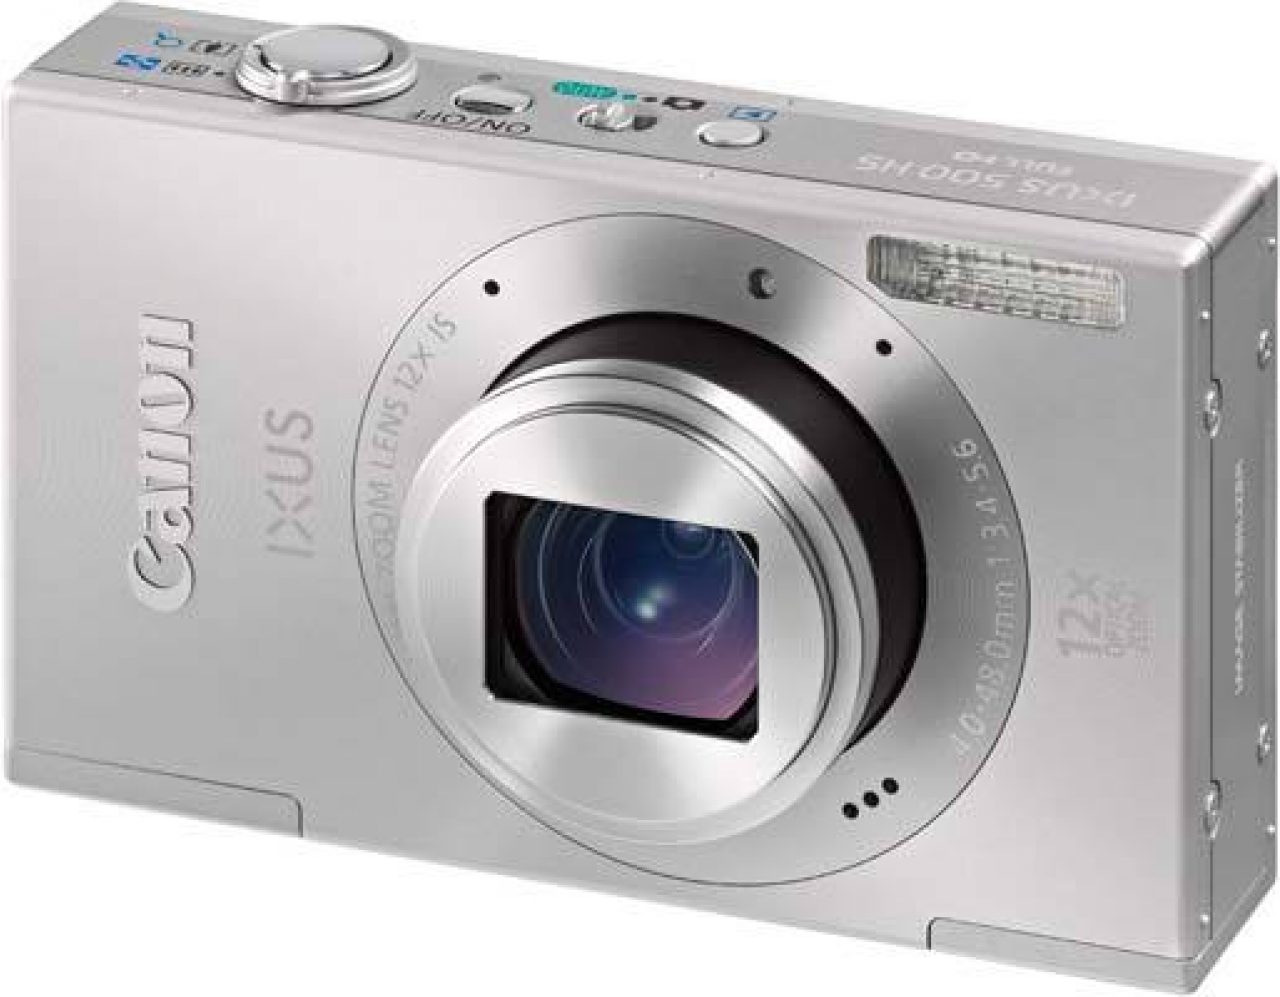 Canon IXUS 500 HS Review | Photography Blog